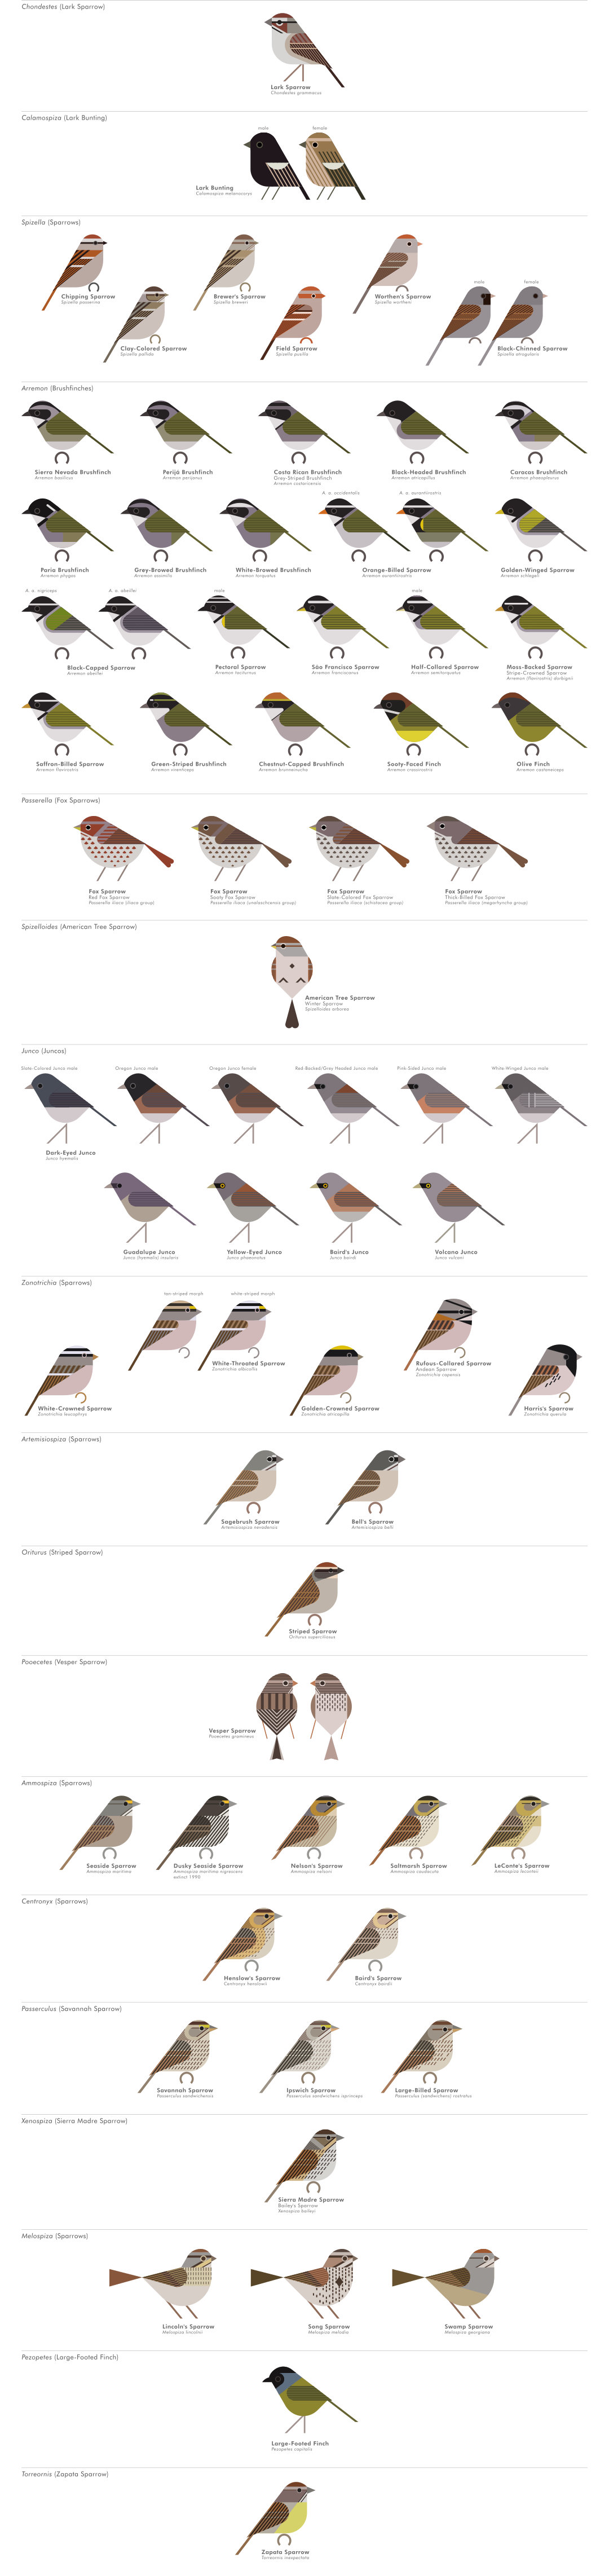 scott partridge - AVE - avian vector encyclopedia - new world sparrows - bird vector art